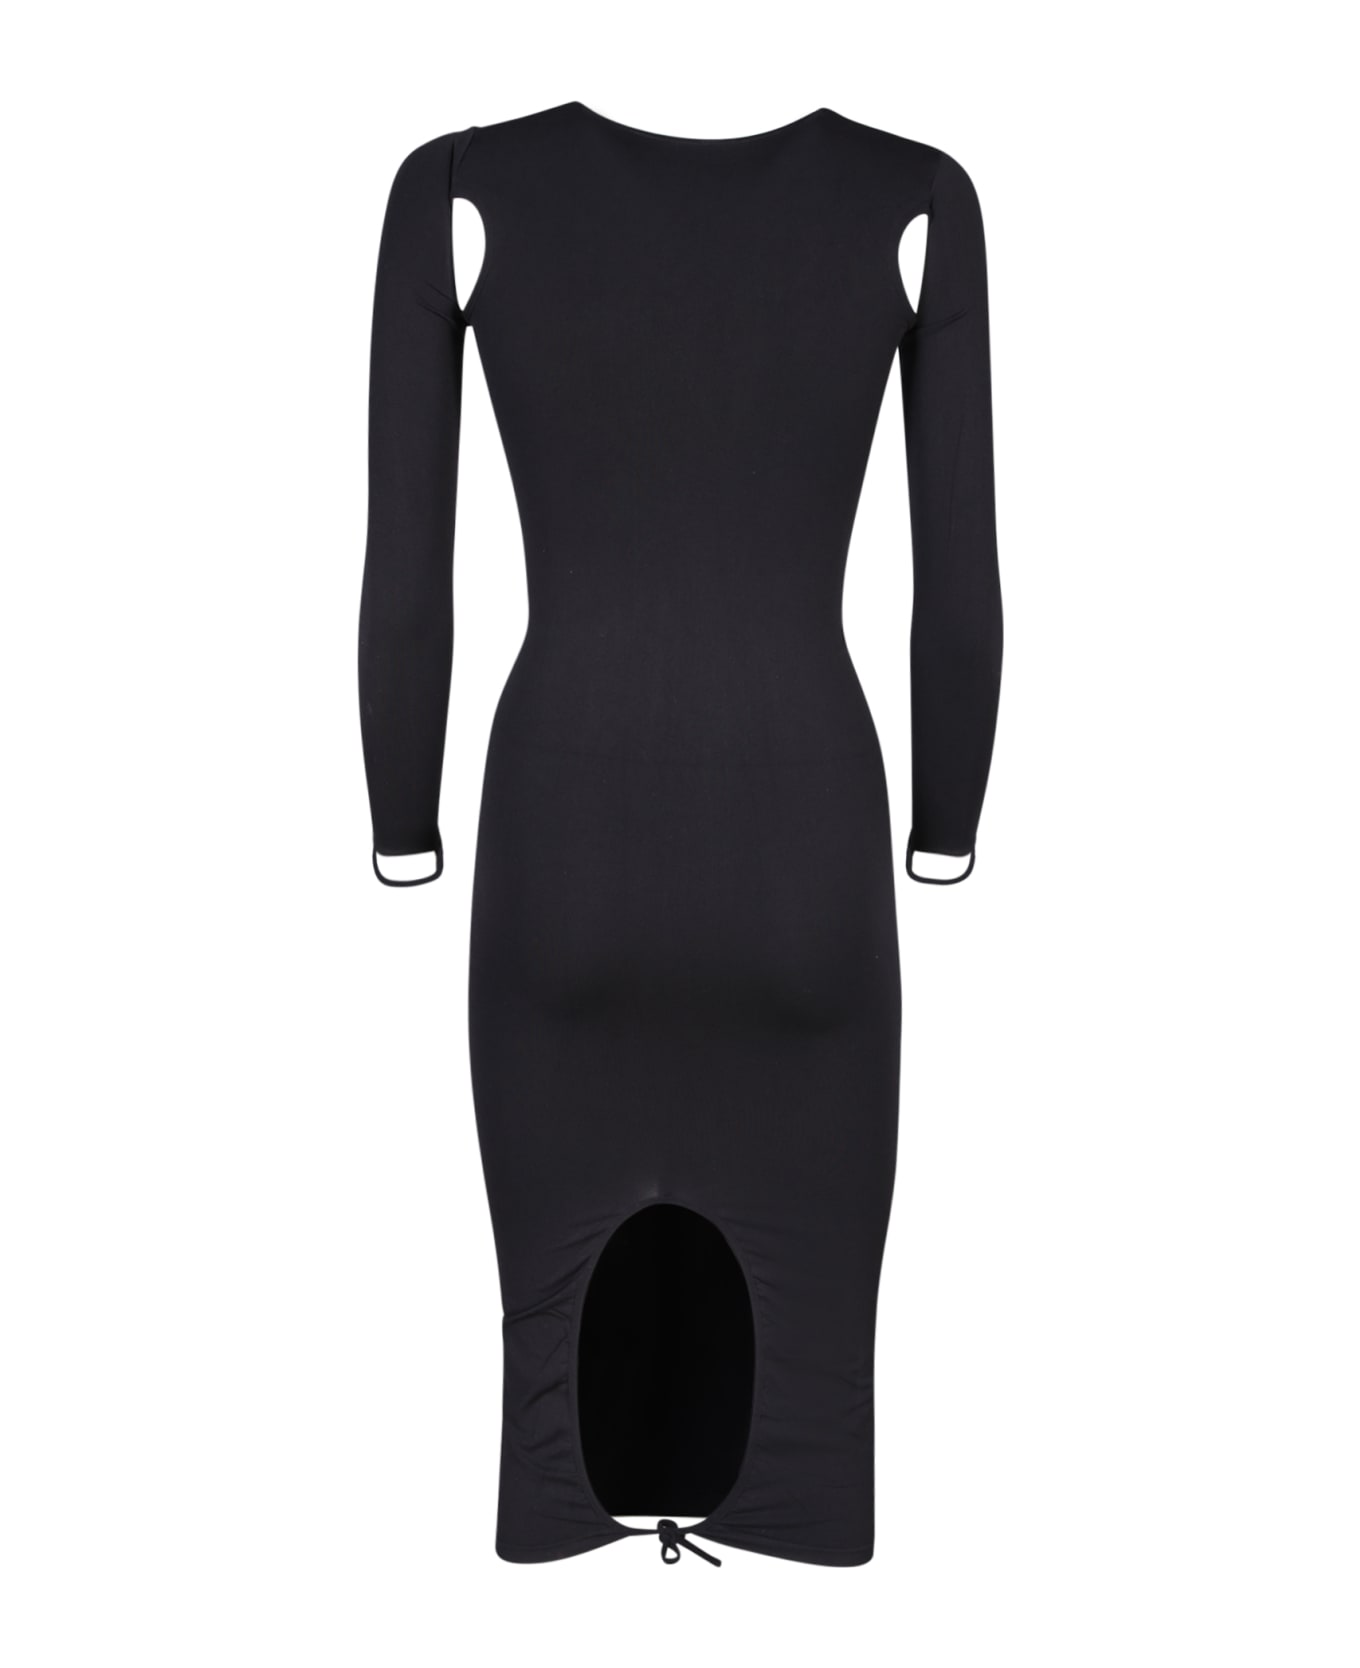 ANDREĀDAMO Cut-out Details Black Dress - Black ワンピース＆ドレス